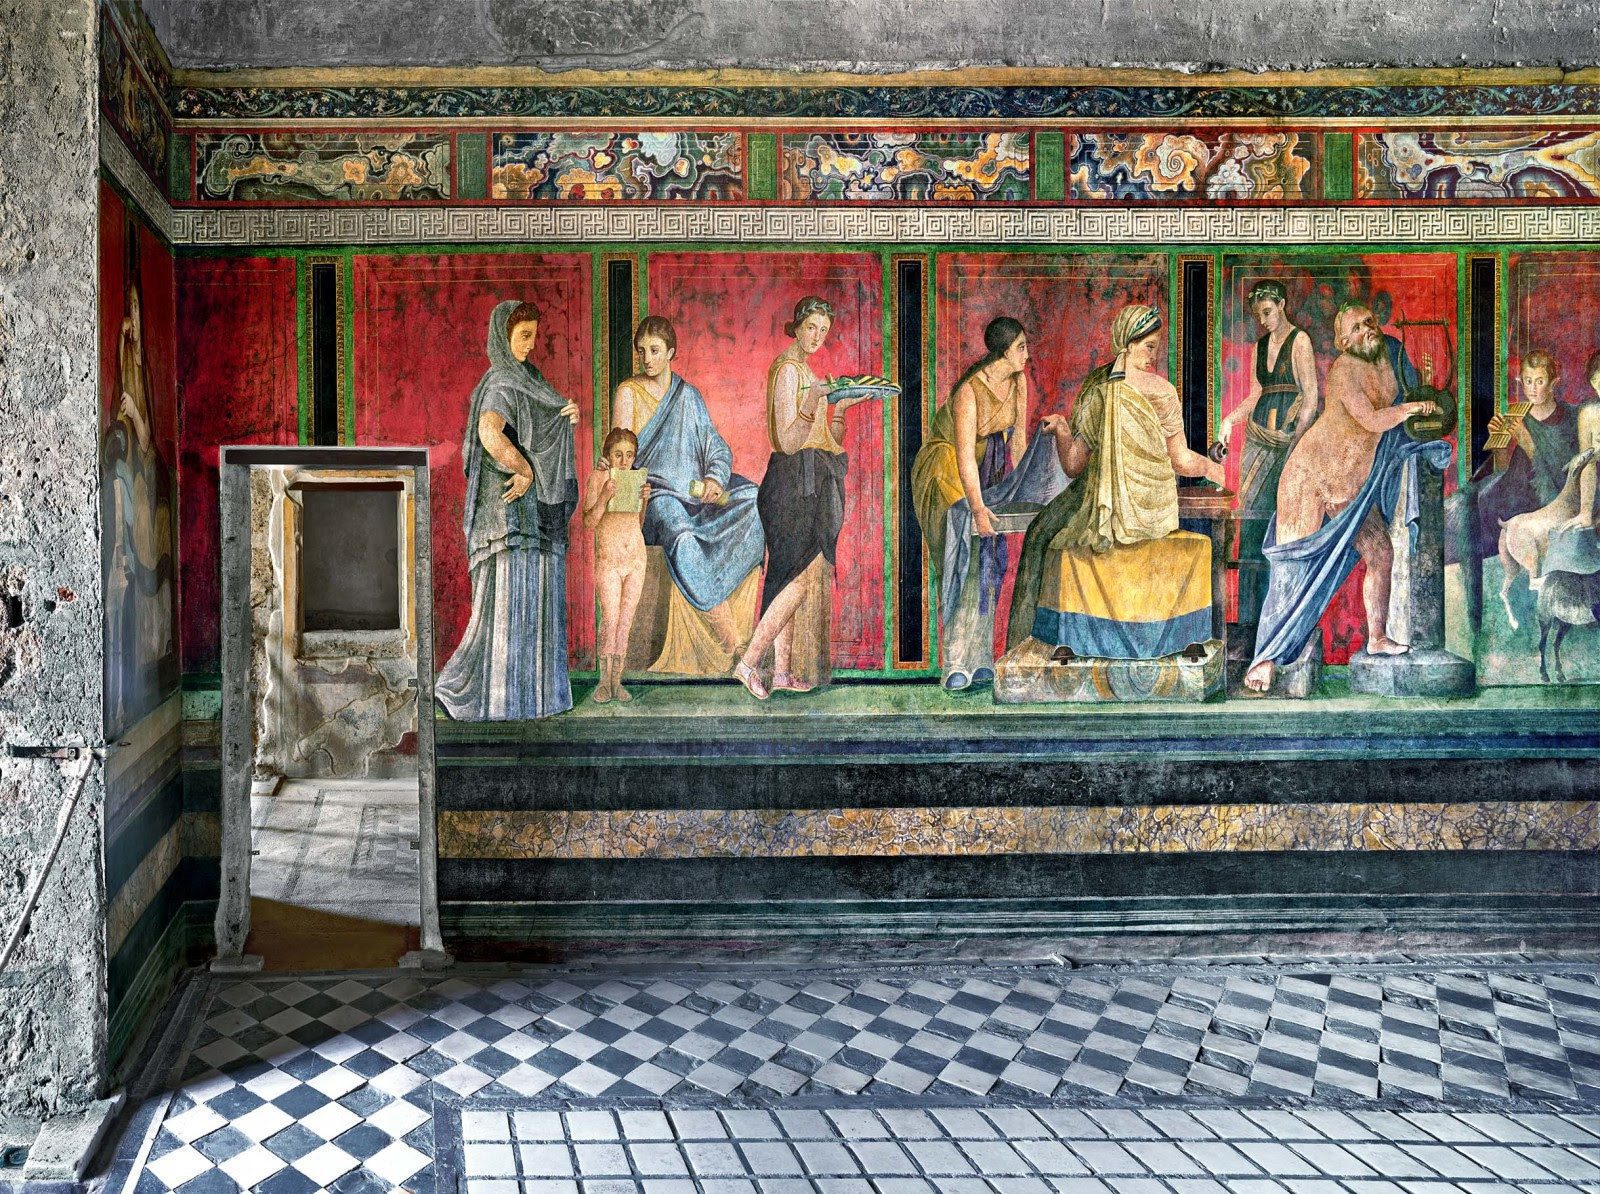 Robert Polidori, Villa dei Misteri #2, Pompeii, Italia, 2017, archival pigment print mounted to Dibond. Courtesy of the artist.